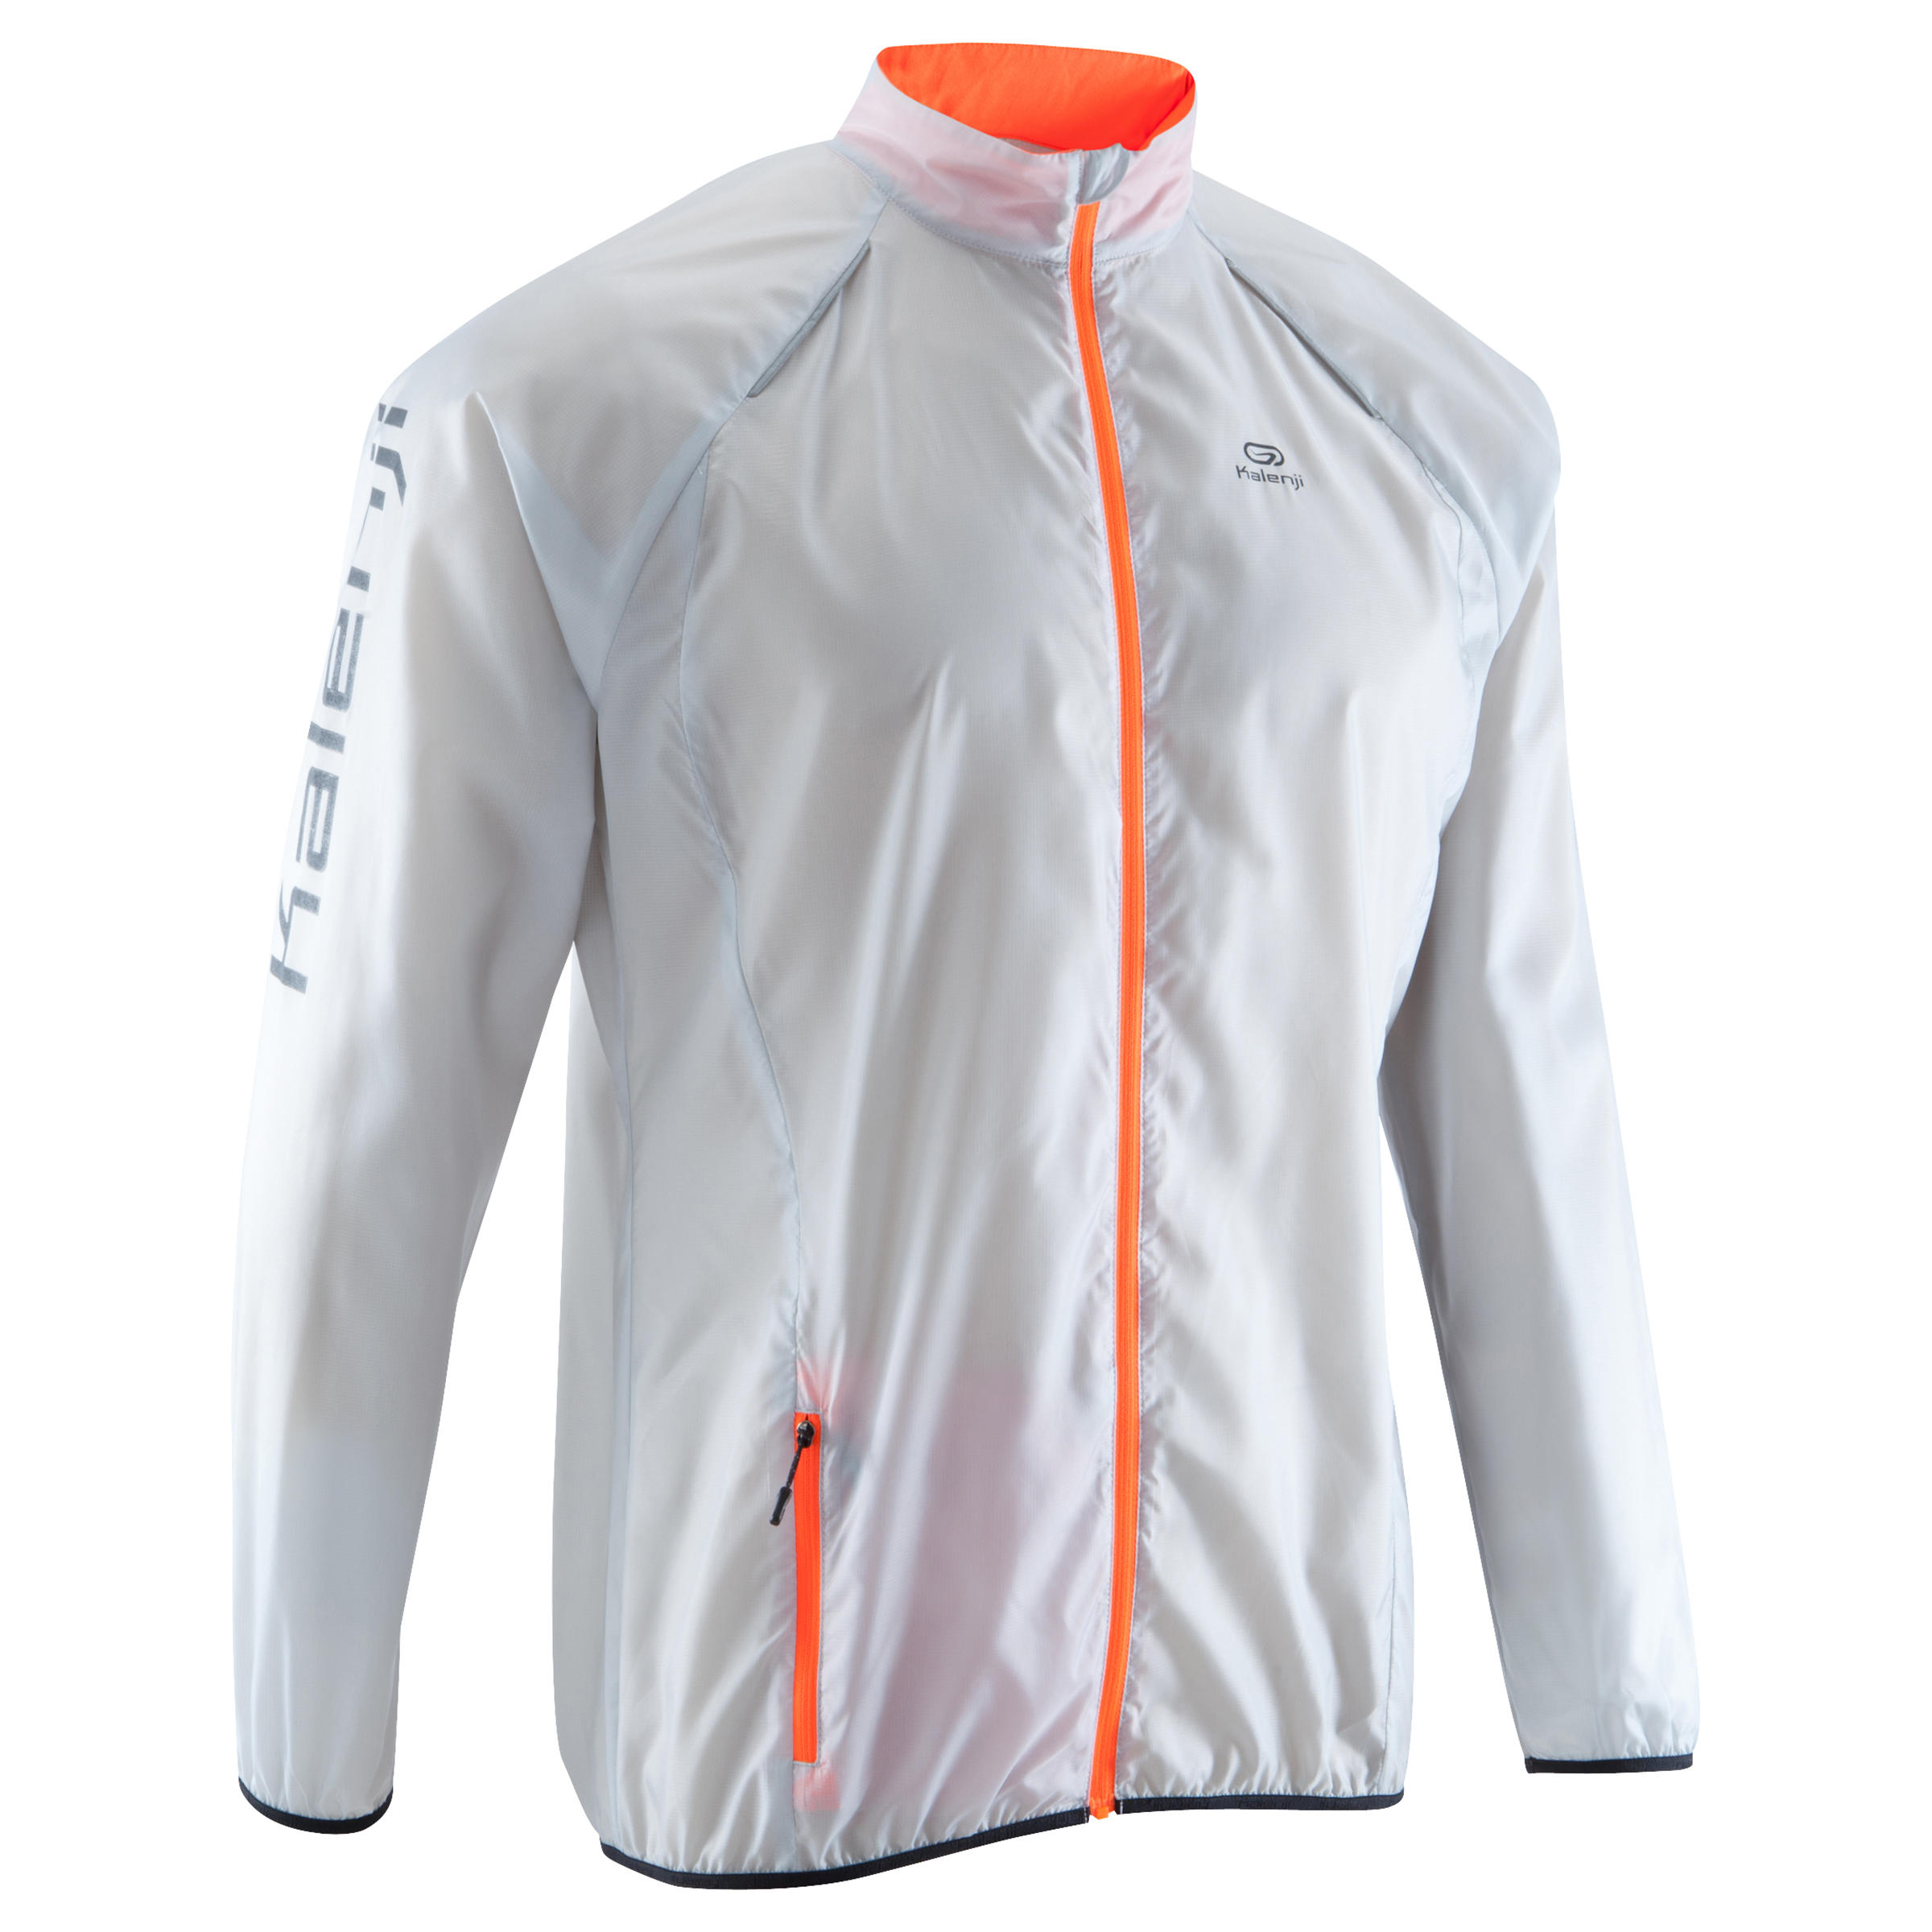 KALENJI Men's Trail Running Windproof Jacket - Grey/Orange